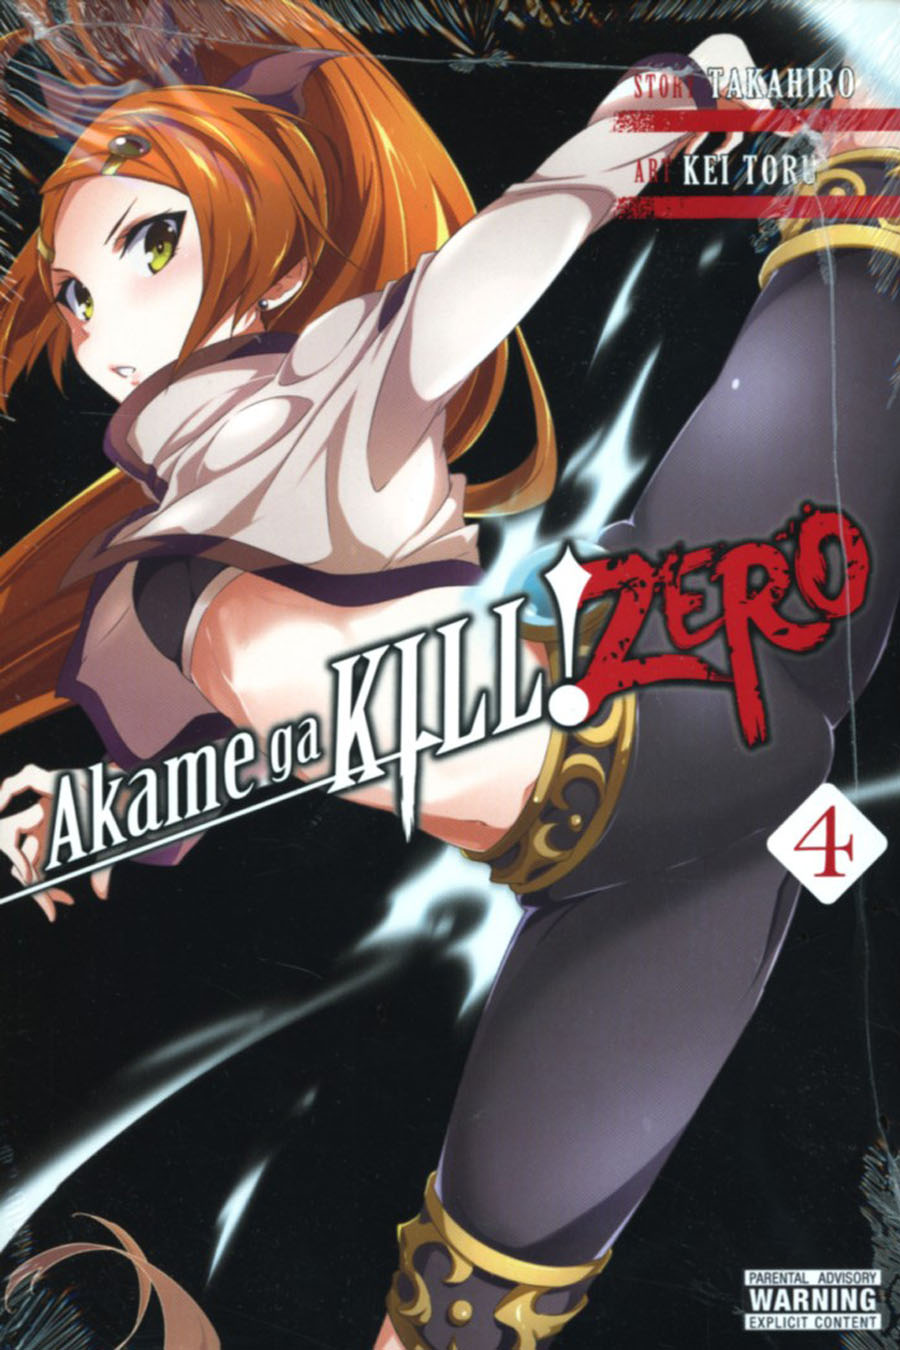 Akame ga KILL! ZERO Vol. 8 (Akame Ga Kill Zero) See more